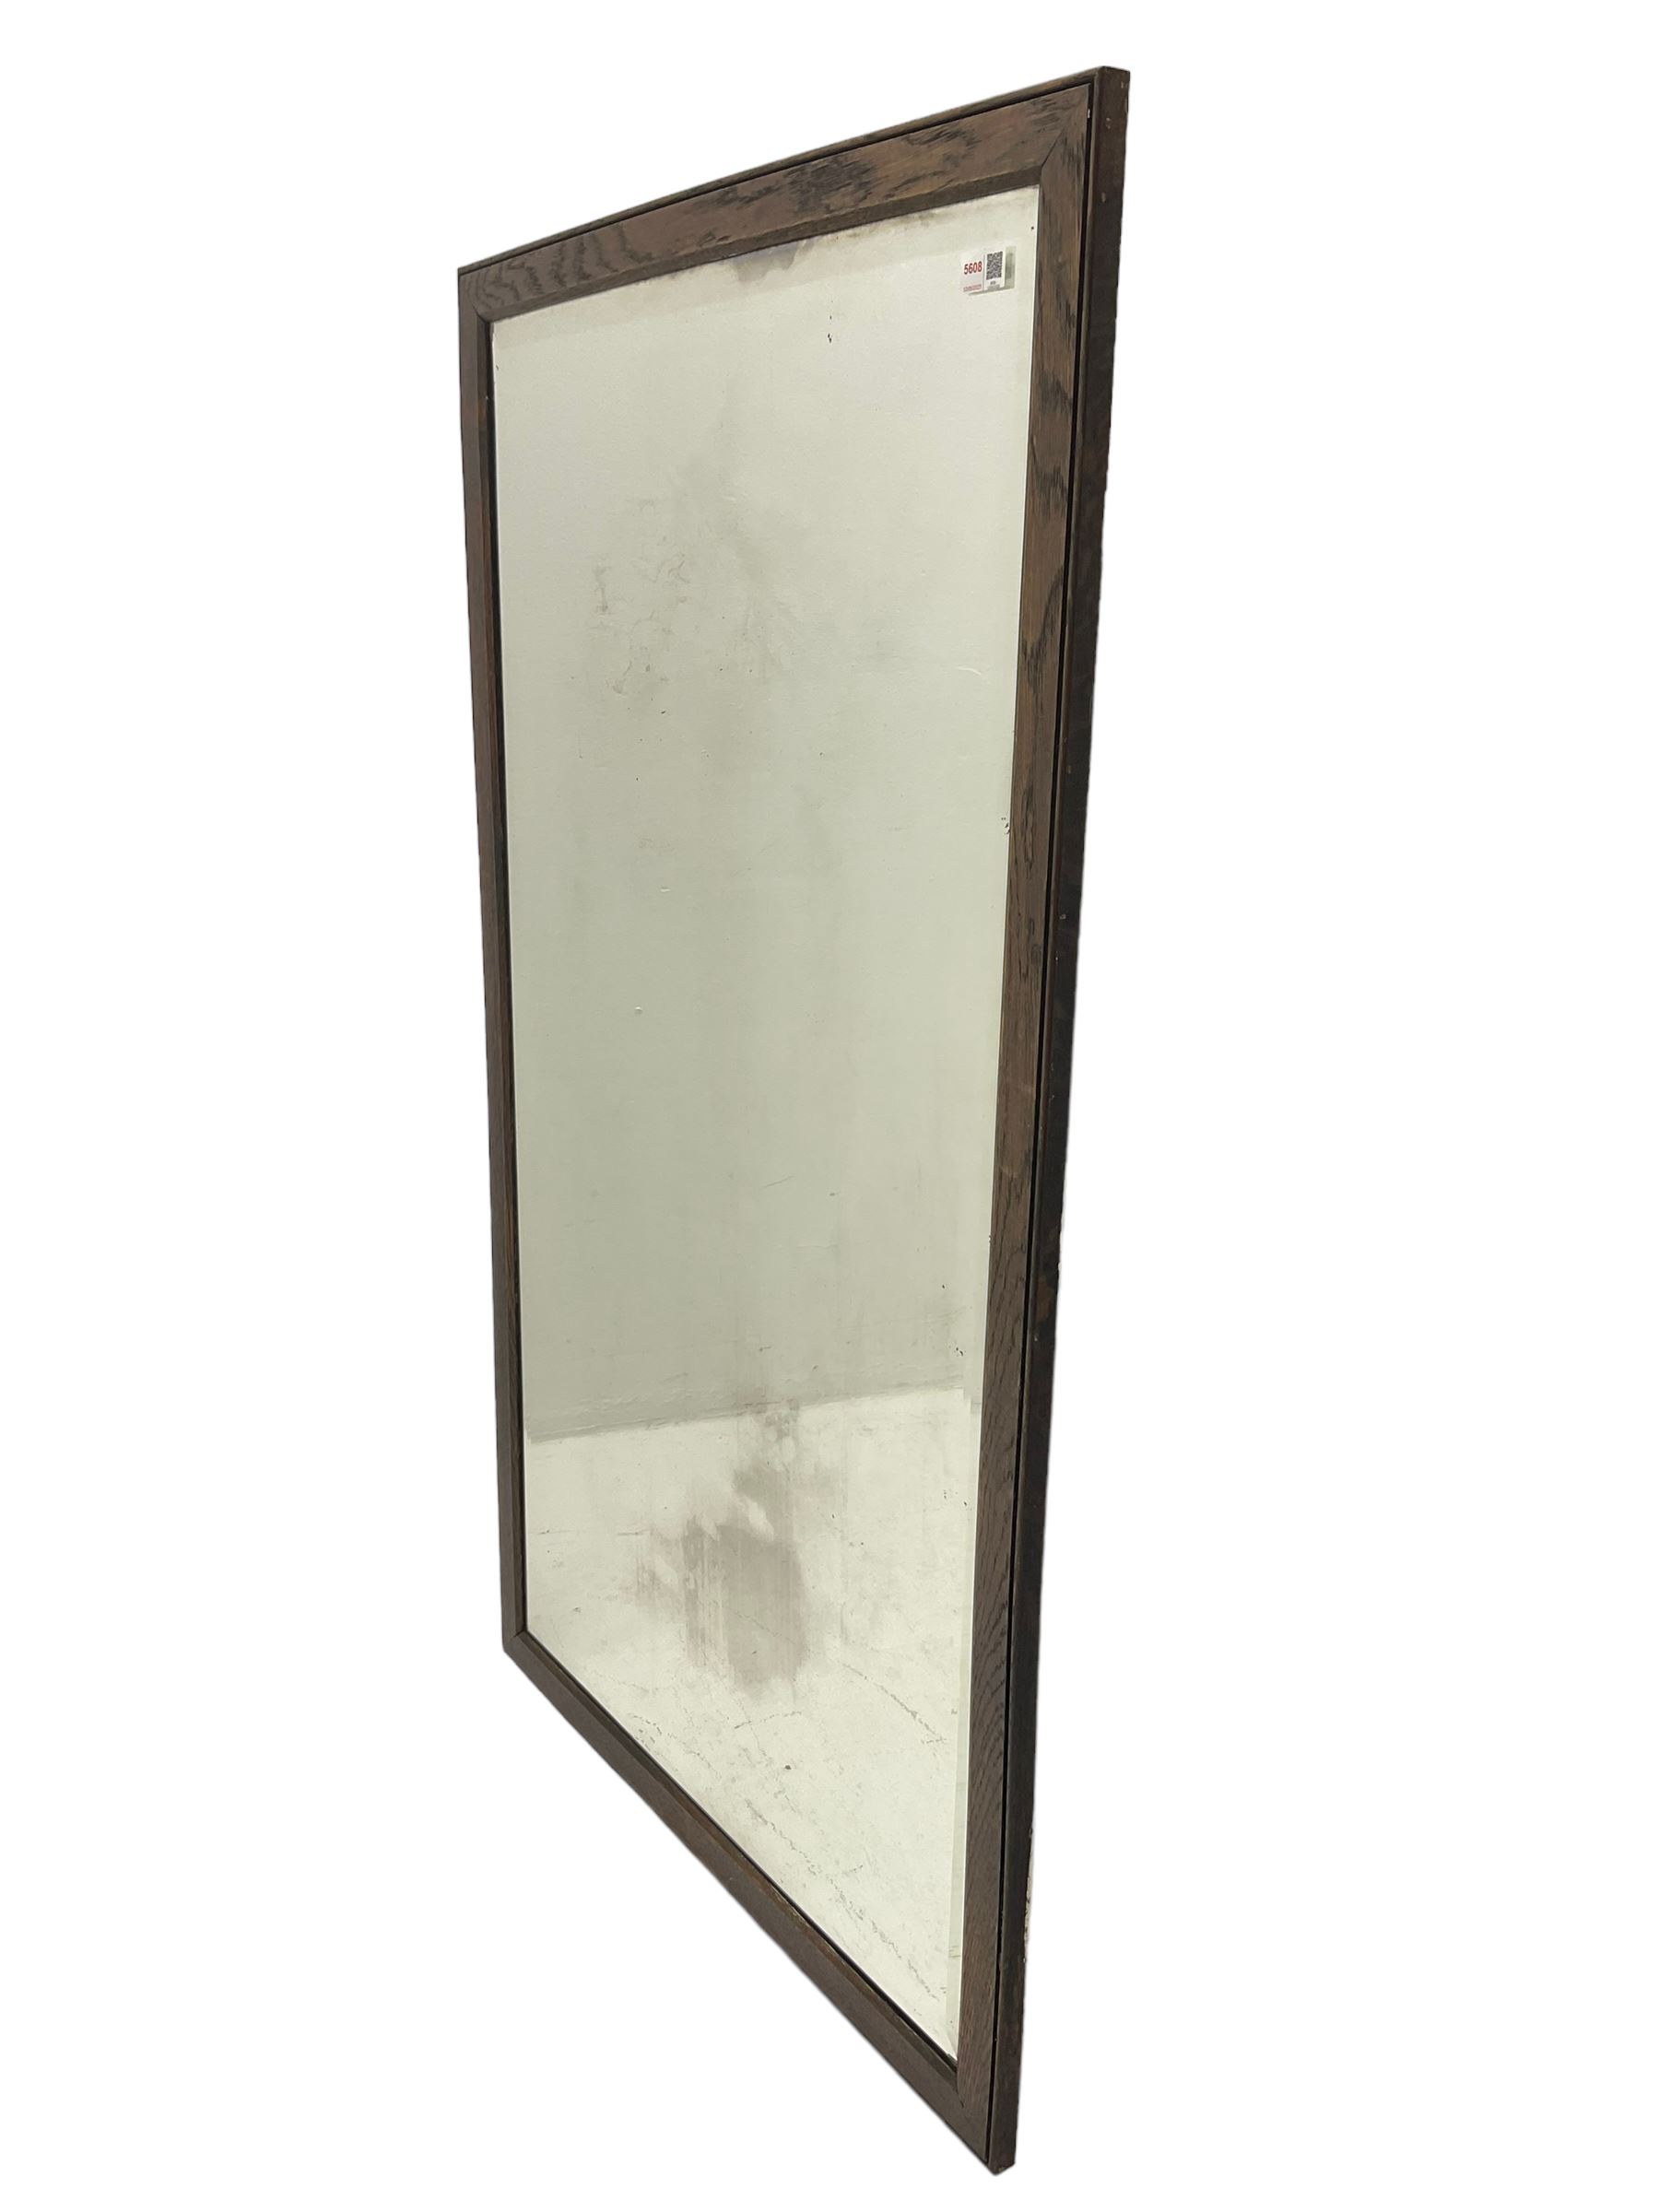 Oak framed mirror with rectangular bevelled plate - Image 2 of 2